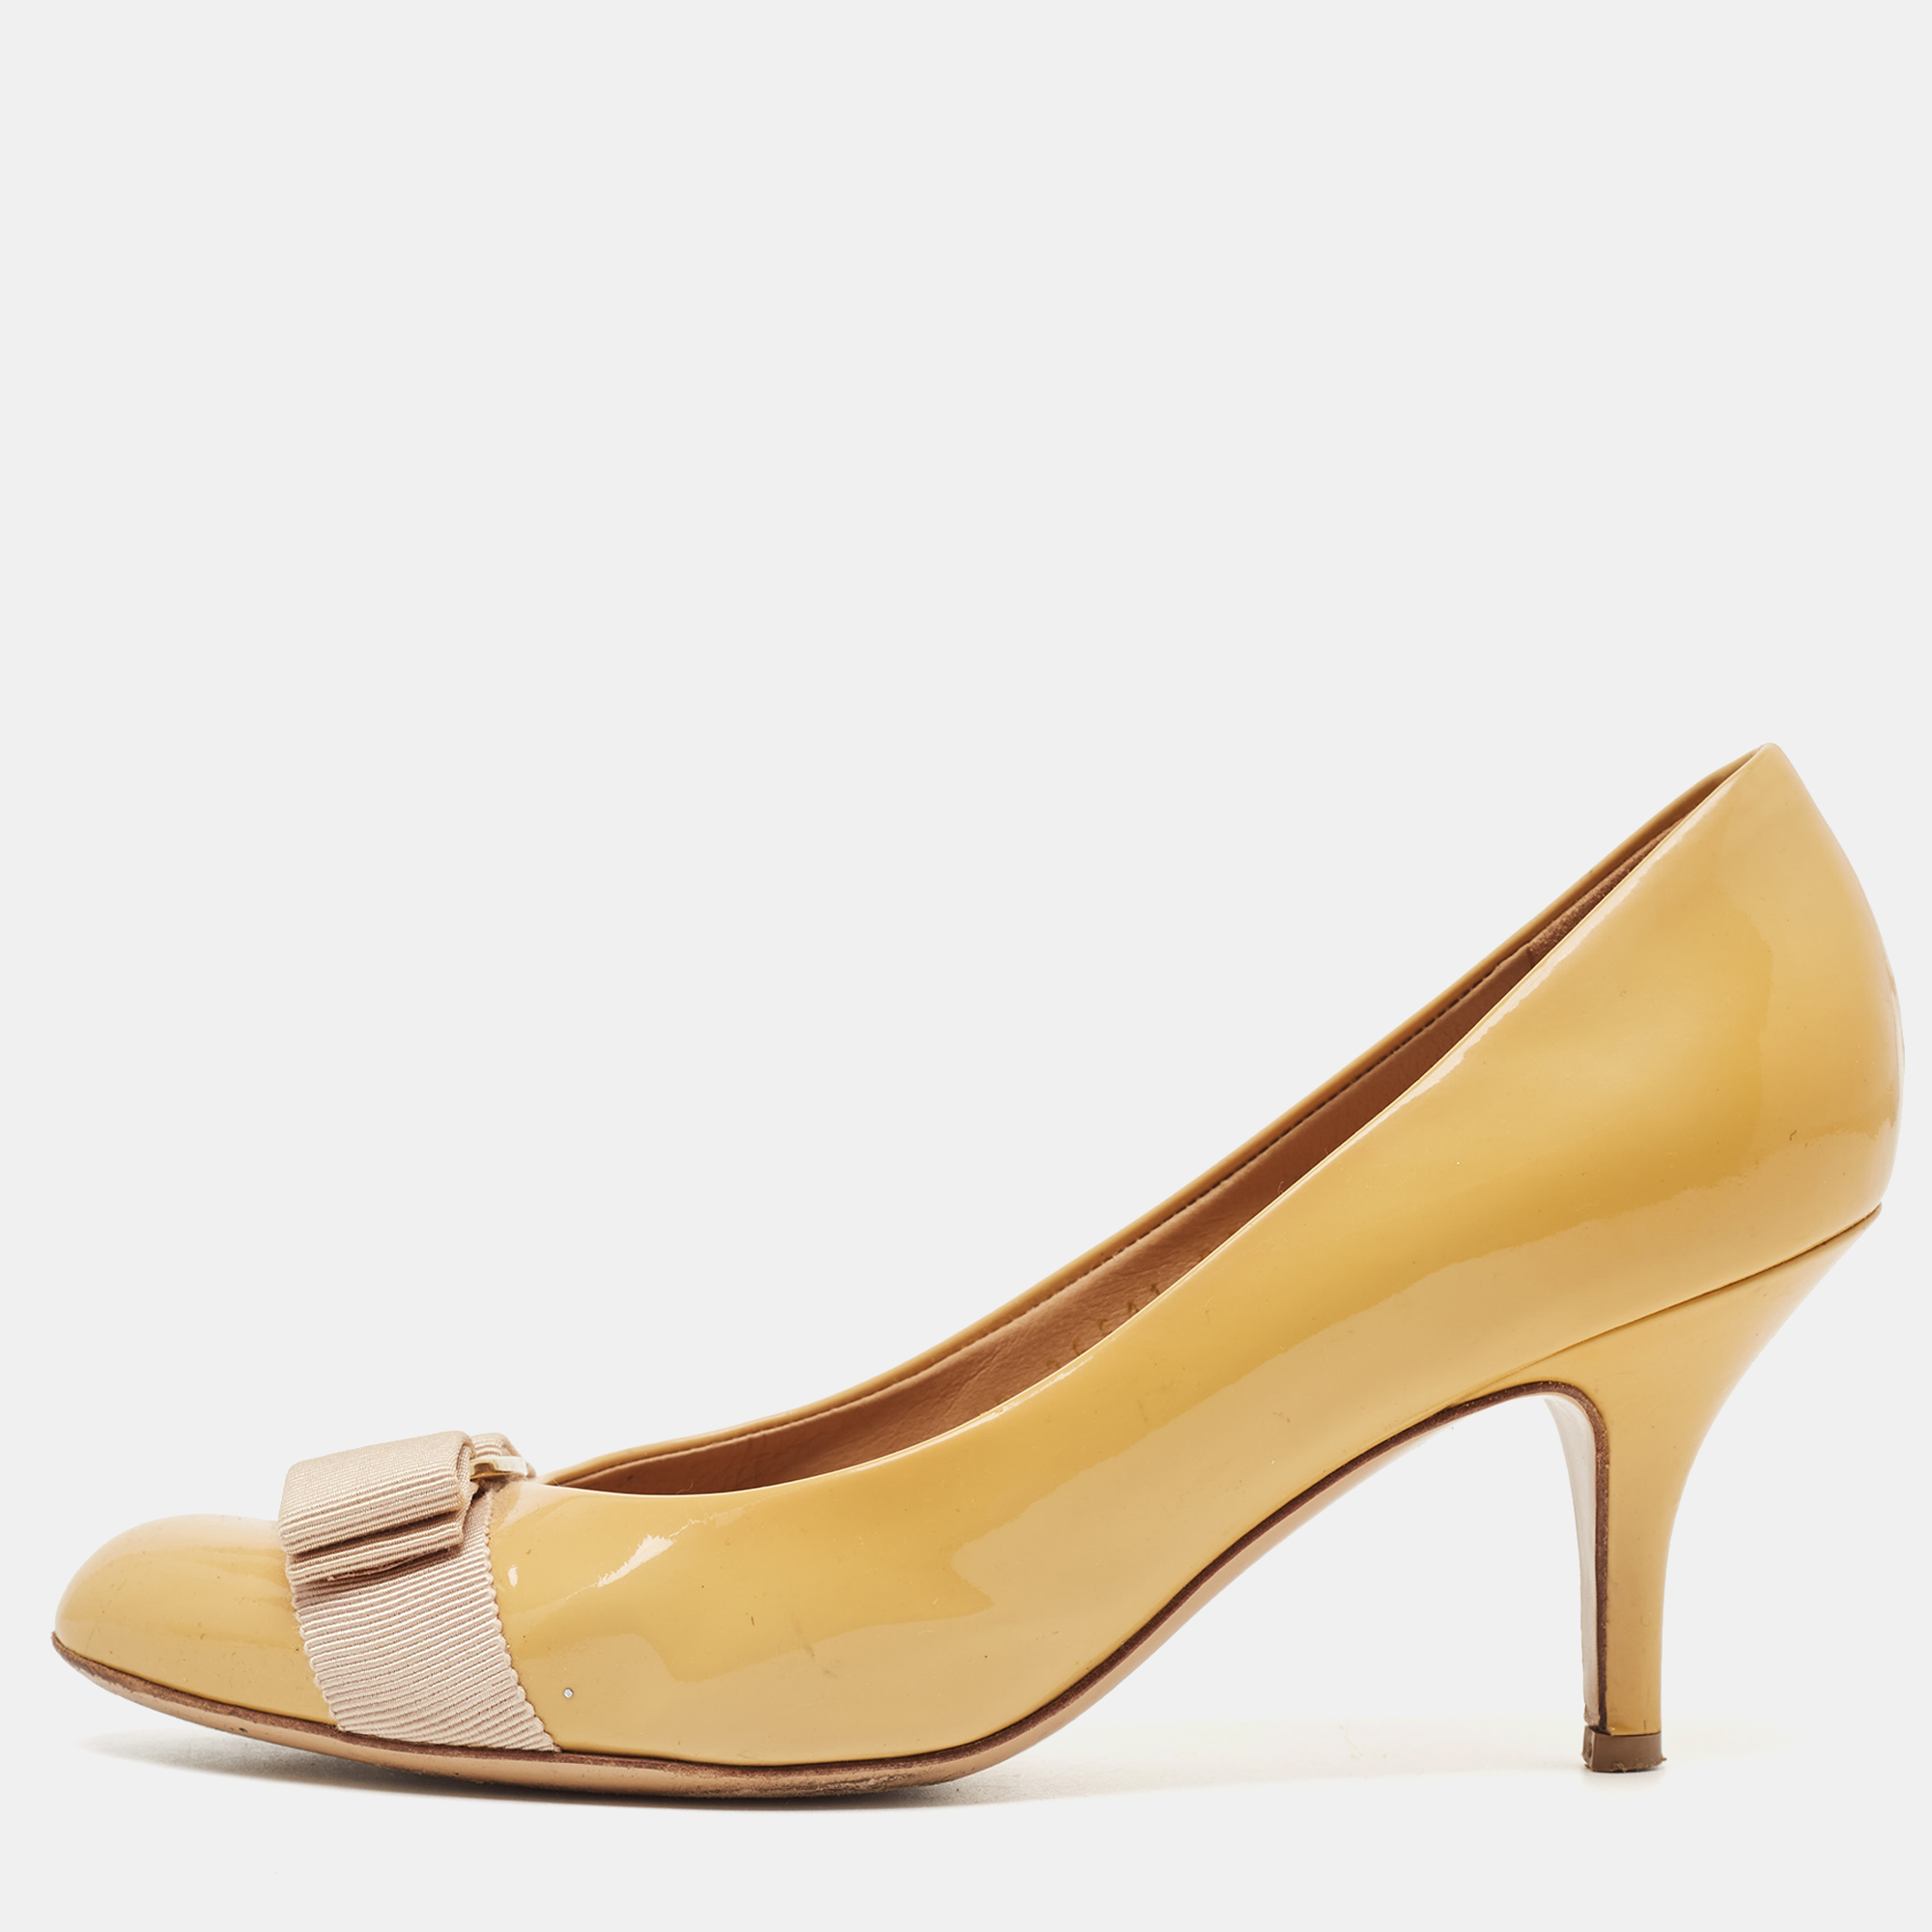 Salvatore ferragamo beige patent leather vara bow block heel pumps size 36.5